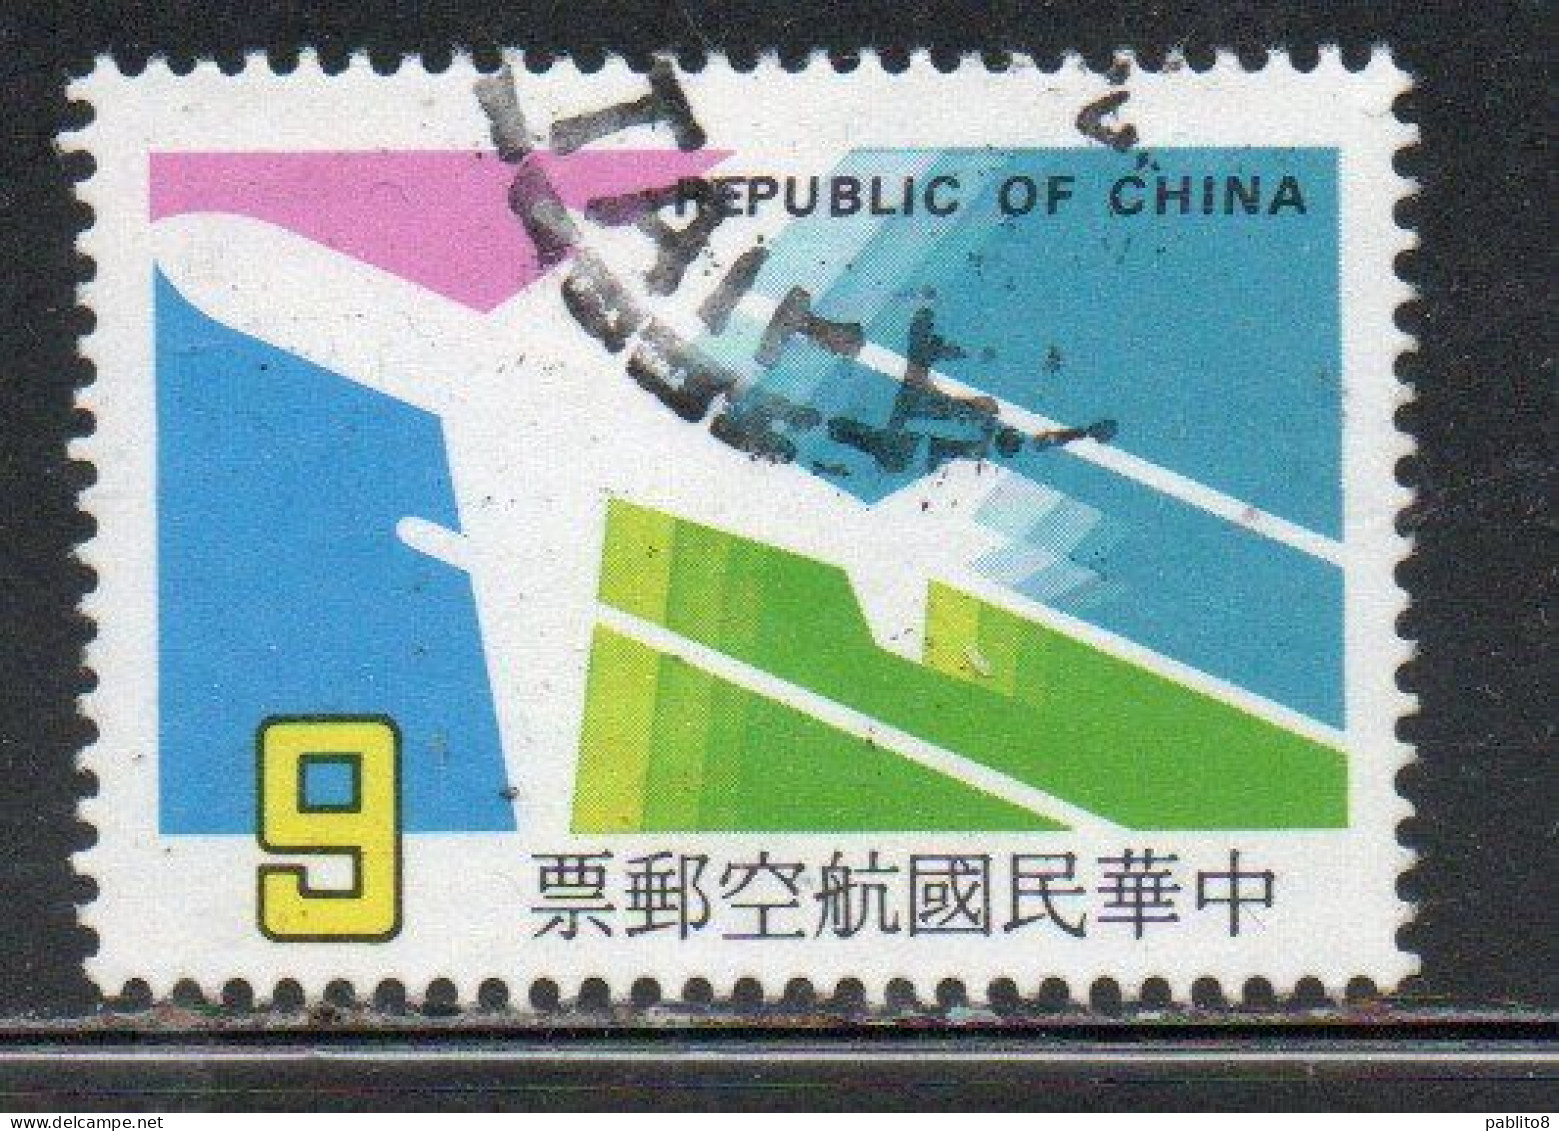 CHINA REPUBLIC CINA TAIWAN FORMOSA 1987 AIR POST MAIL AIRMAIL AIRPLANE 9$ USED USATO OBLITERE' - Posta Aerea